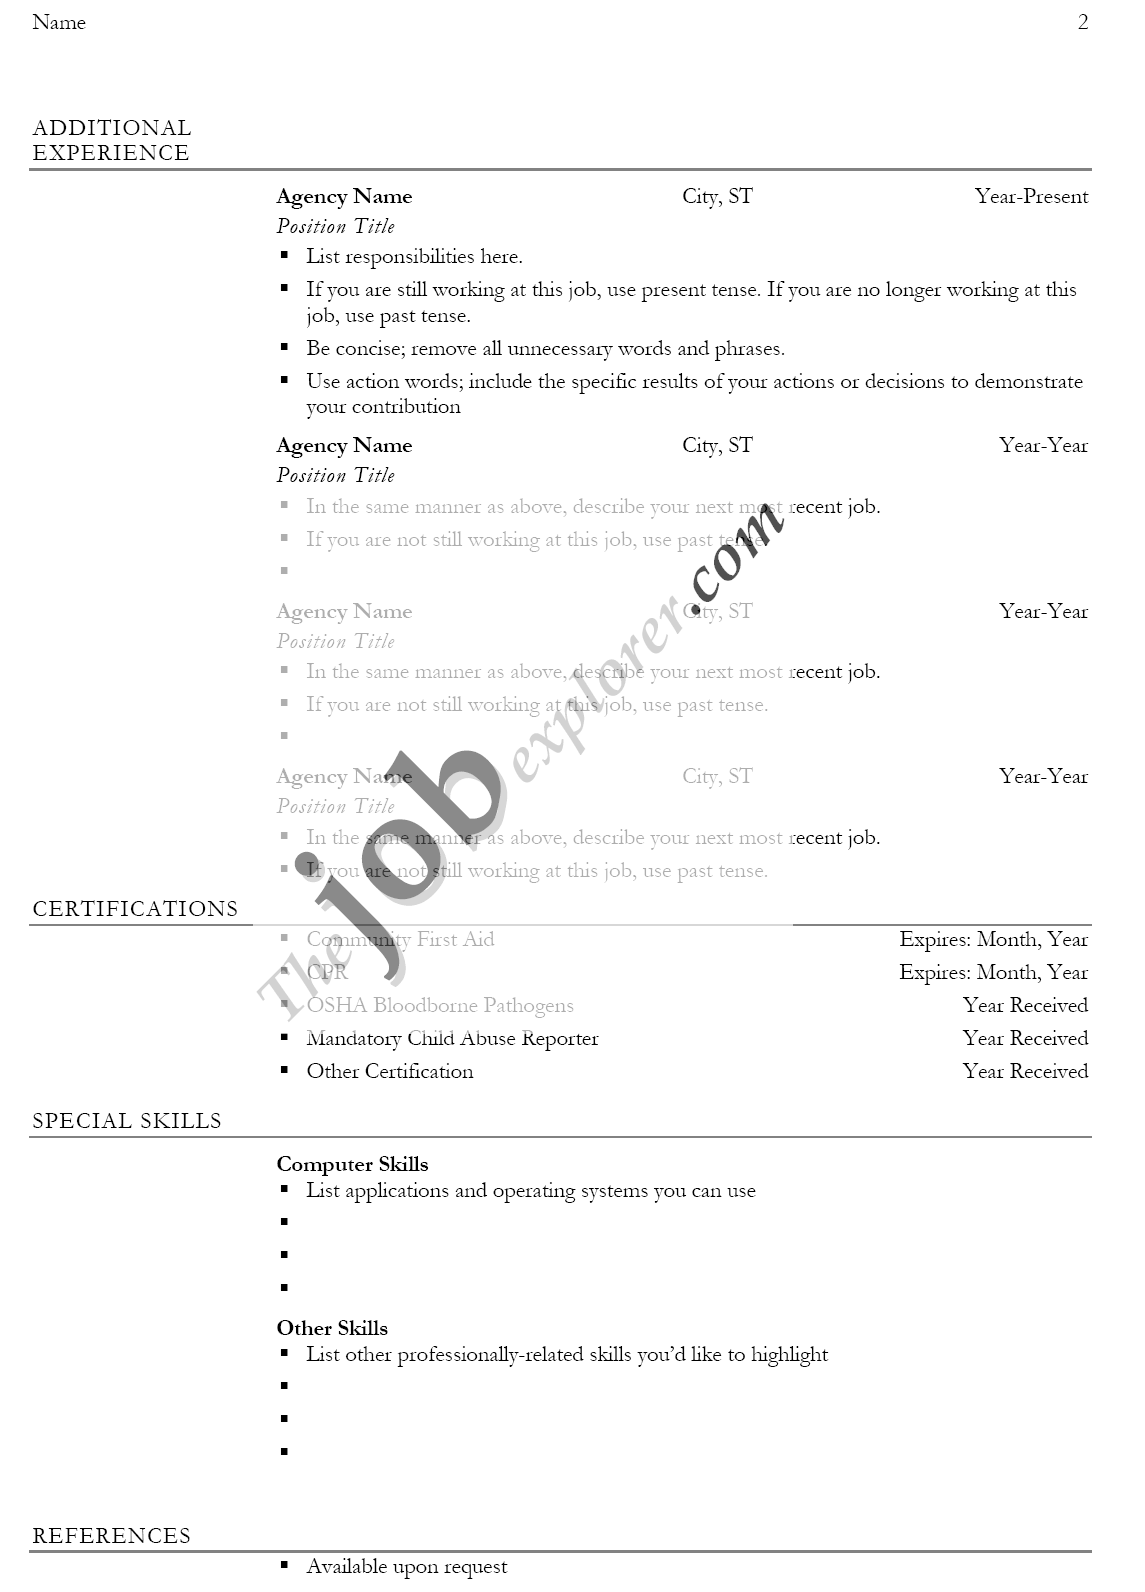 Job Application Resume Format from www.thejobexplorer.com